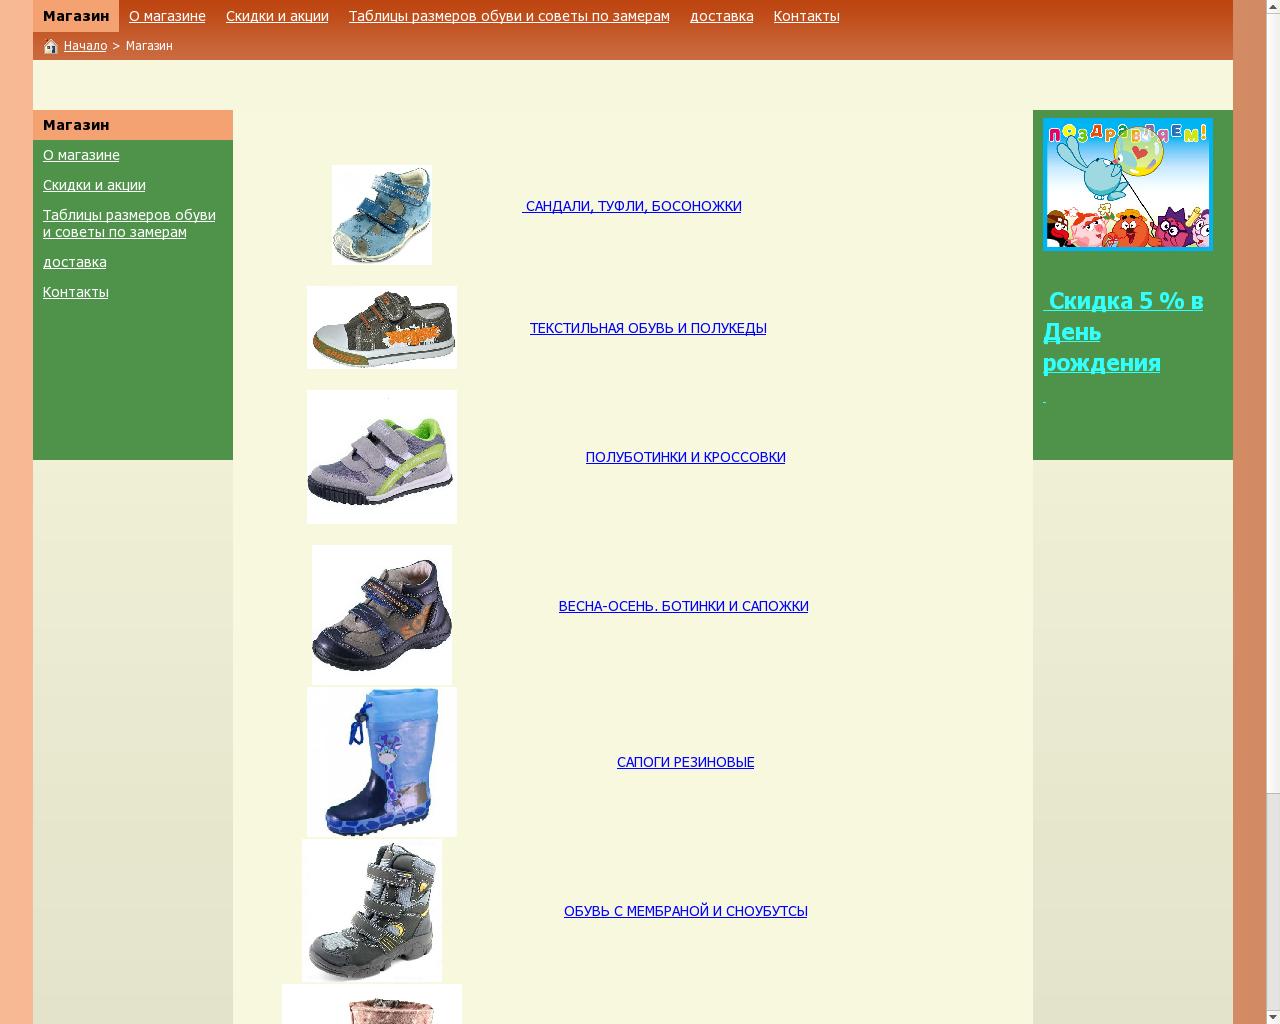 Изображение сайта asbest-kids-shoes.ru в разрешении 1280x1024